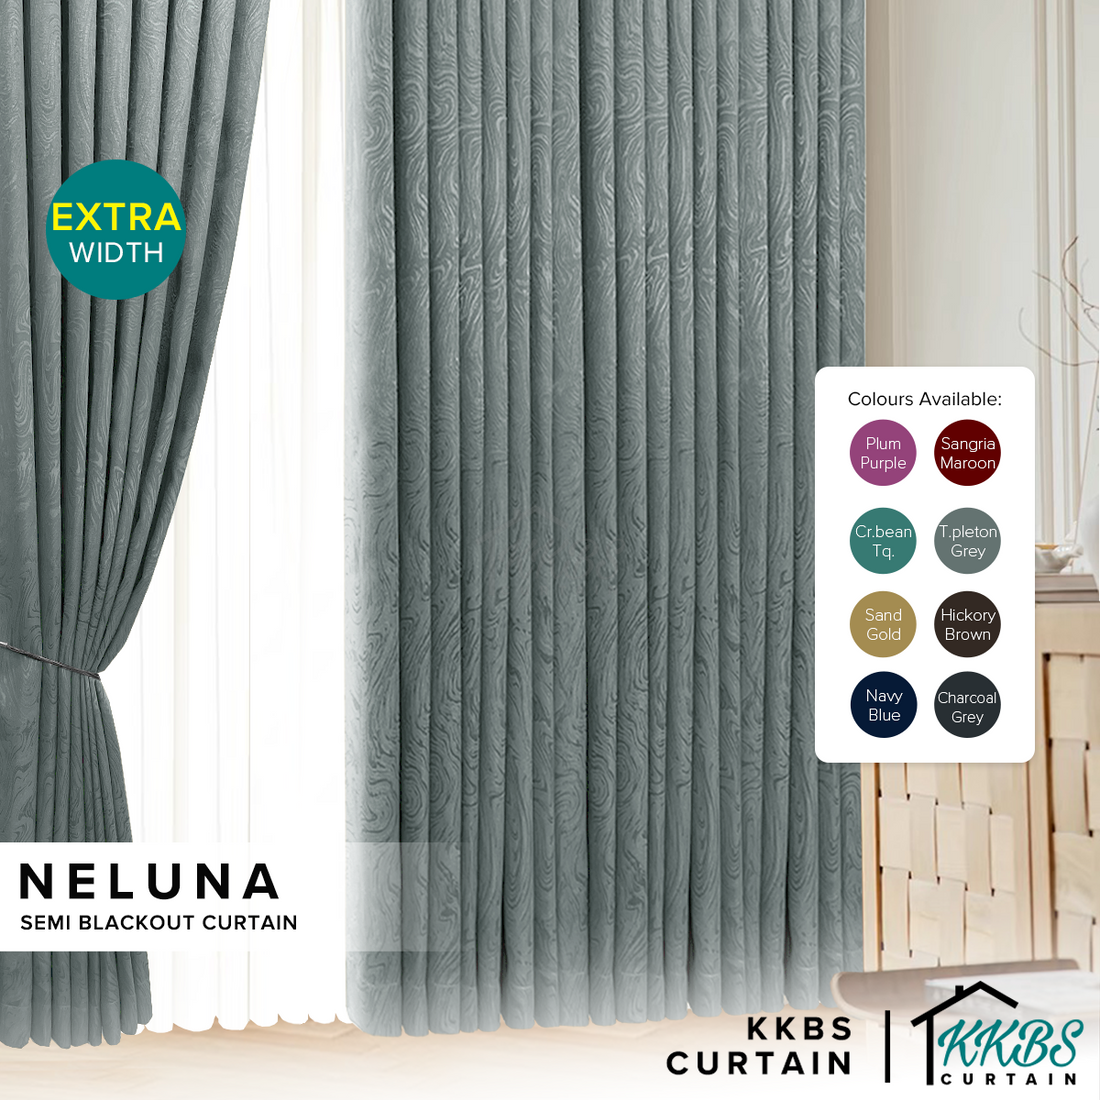 Neluna Semi Blackout Curtain Ready Made Extra Width